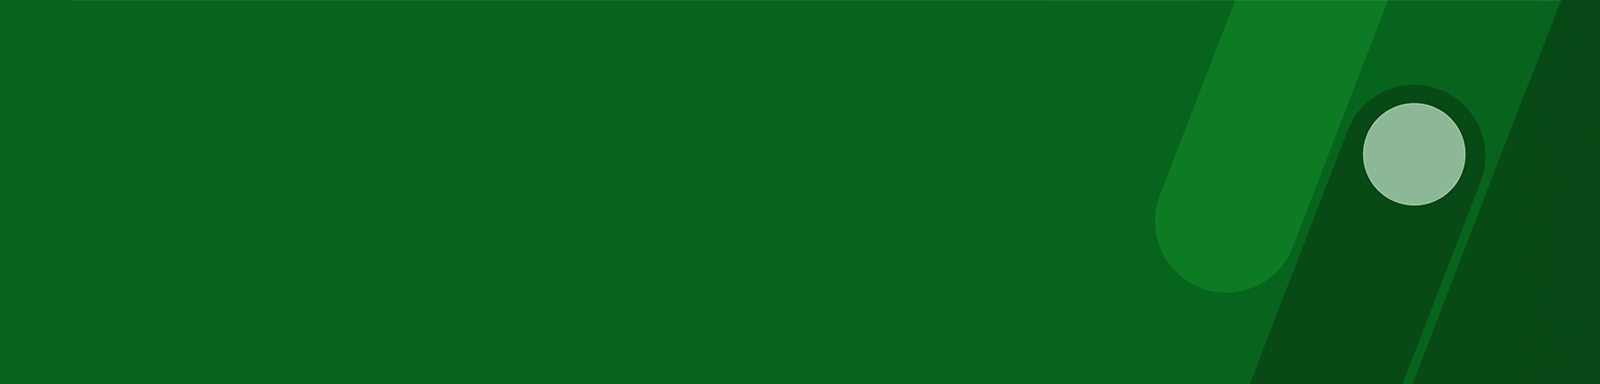 Un objeto rectangular verde con el texto Ciberdelito